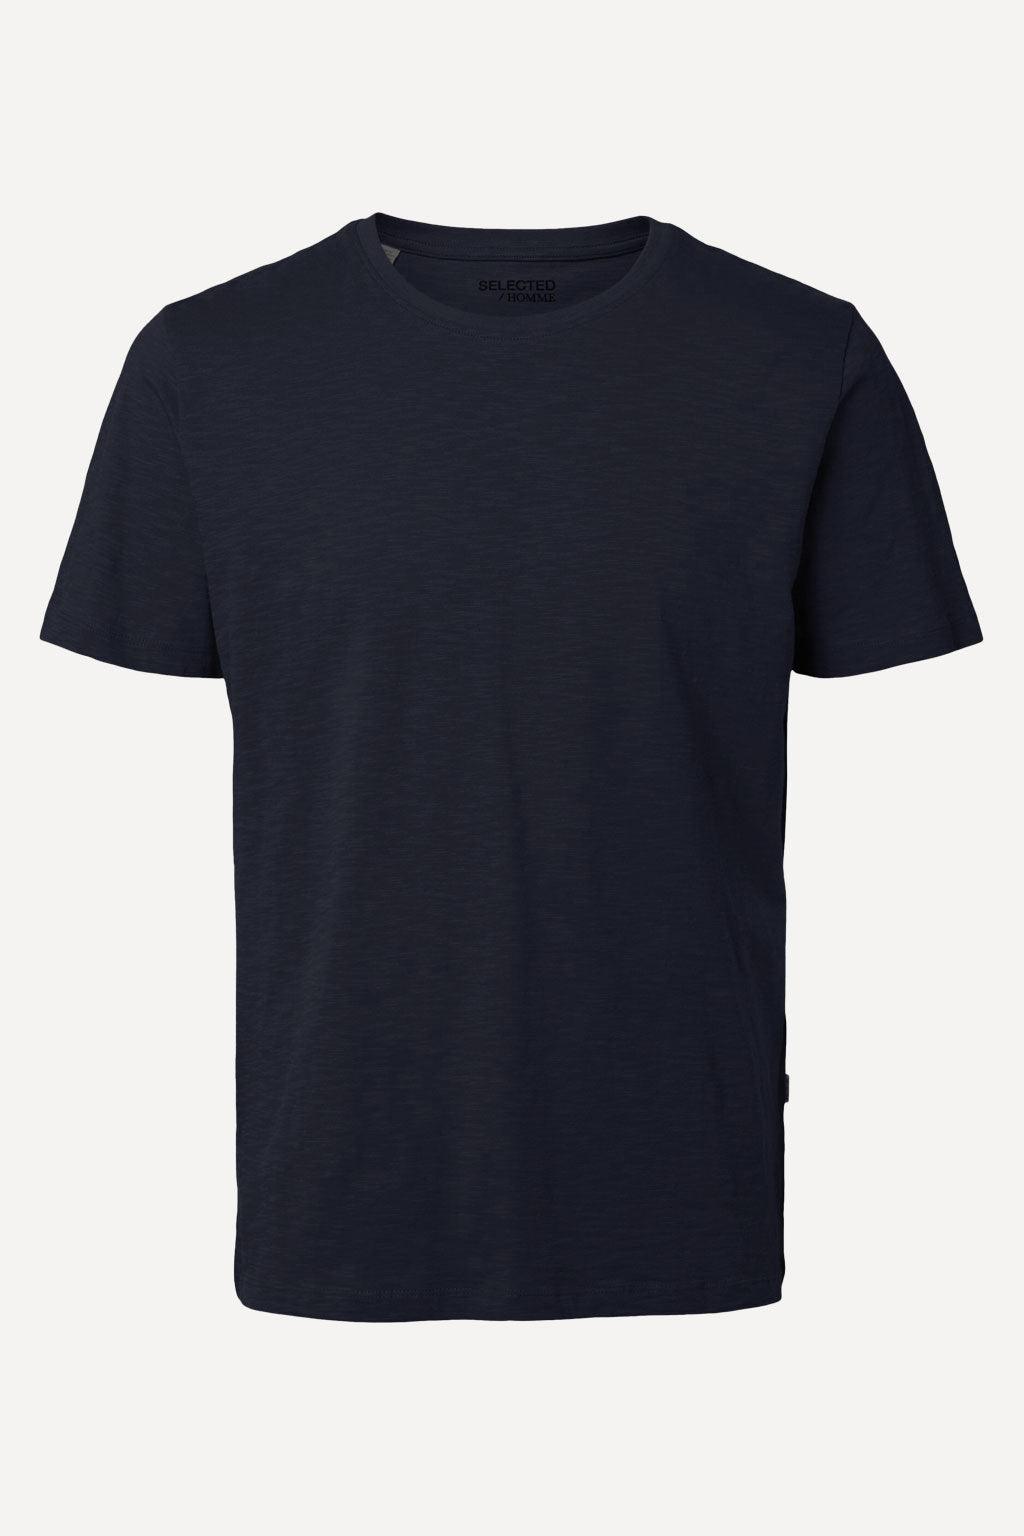 Selected t-shirt - Big Boss | the menswear concept